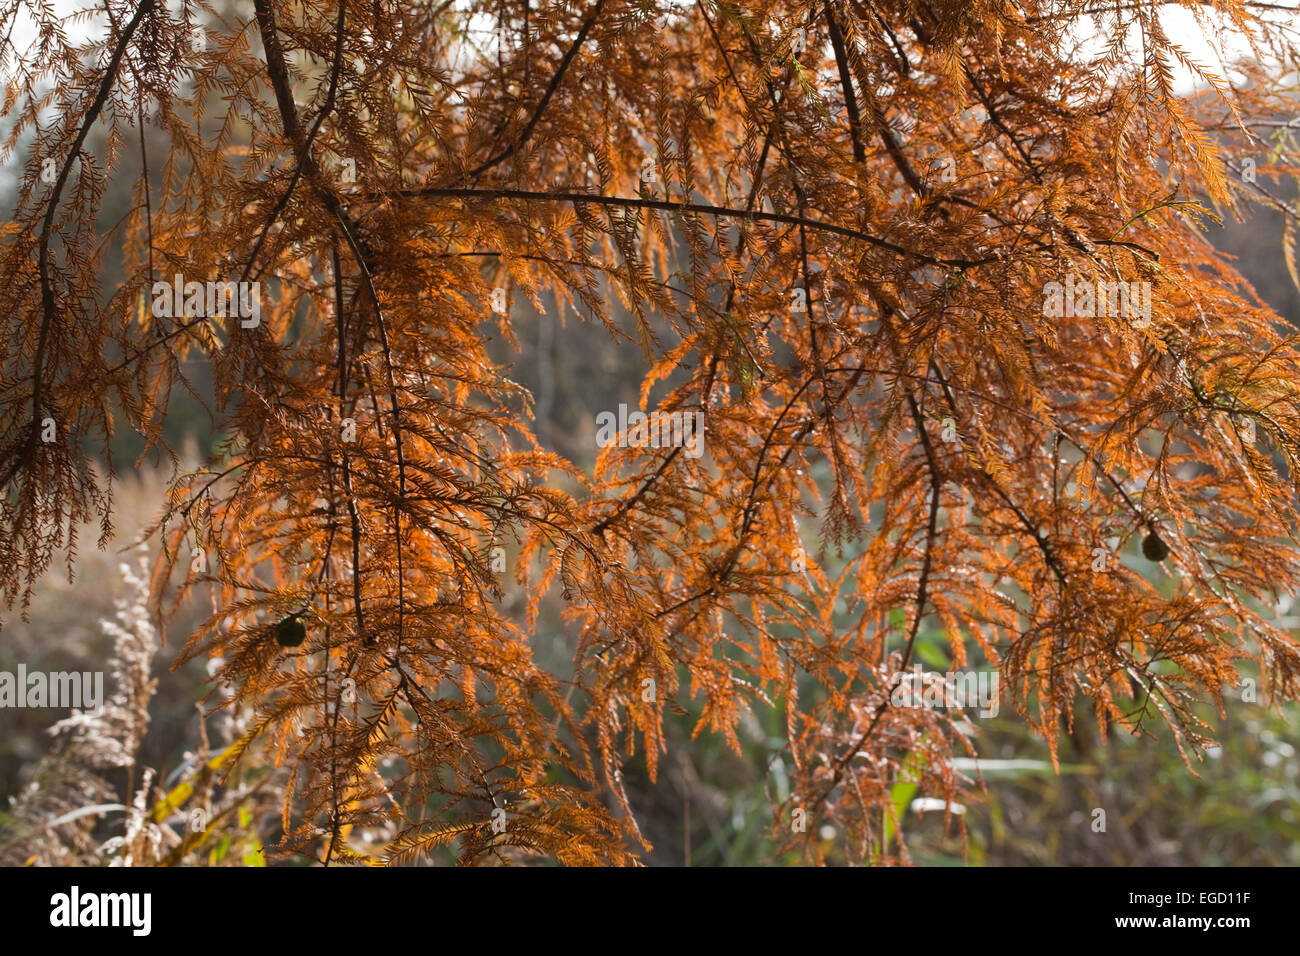 Swamp Cypress (Taxodium distichum). Autumn or Fall foliage. Introduced specimen. UK. Calthorpe Broad. NNR. SSSI. RAMSAR. Stock Photo